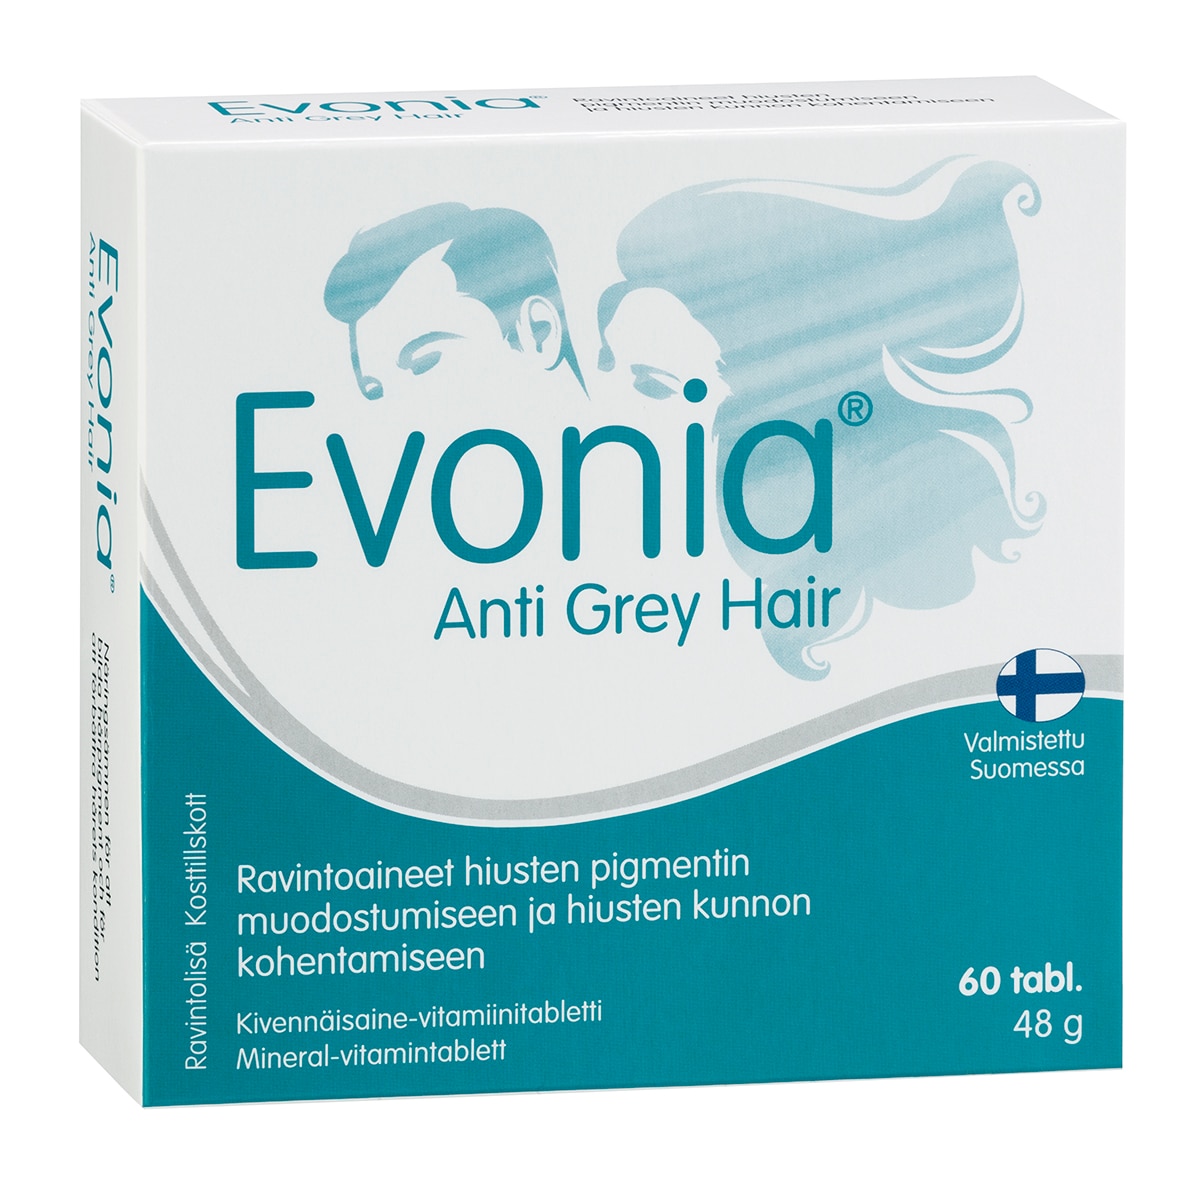 Evonia Anti Grey Hair 60 tab